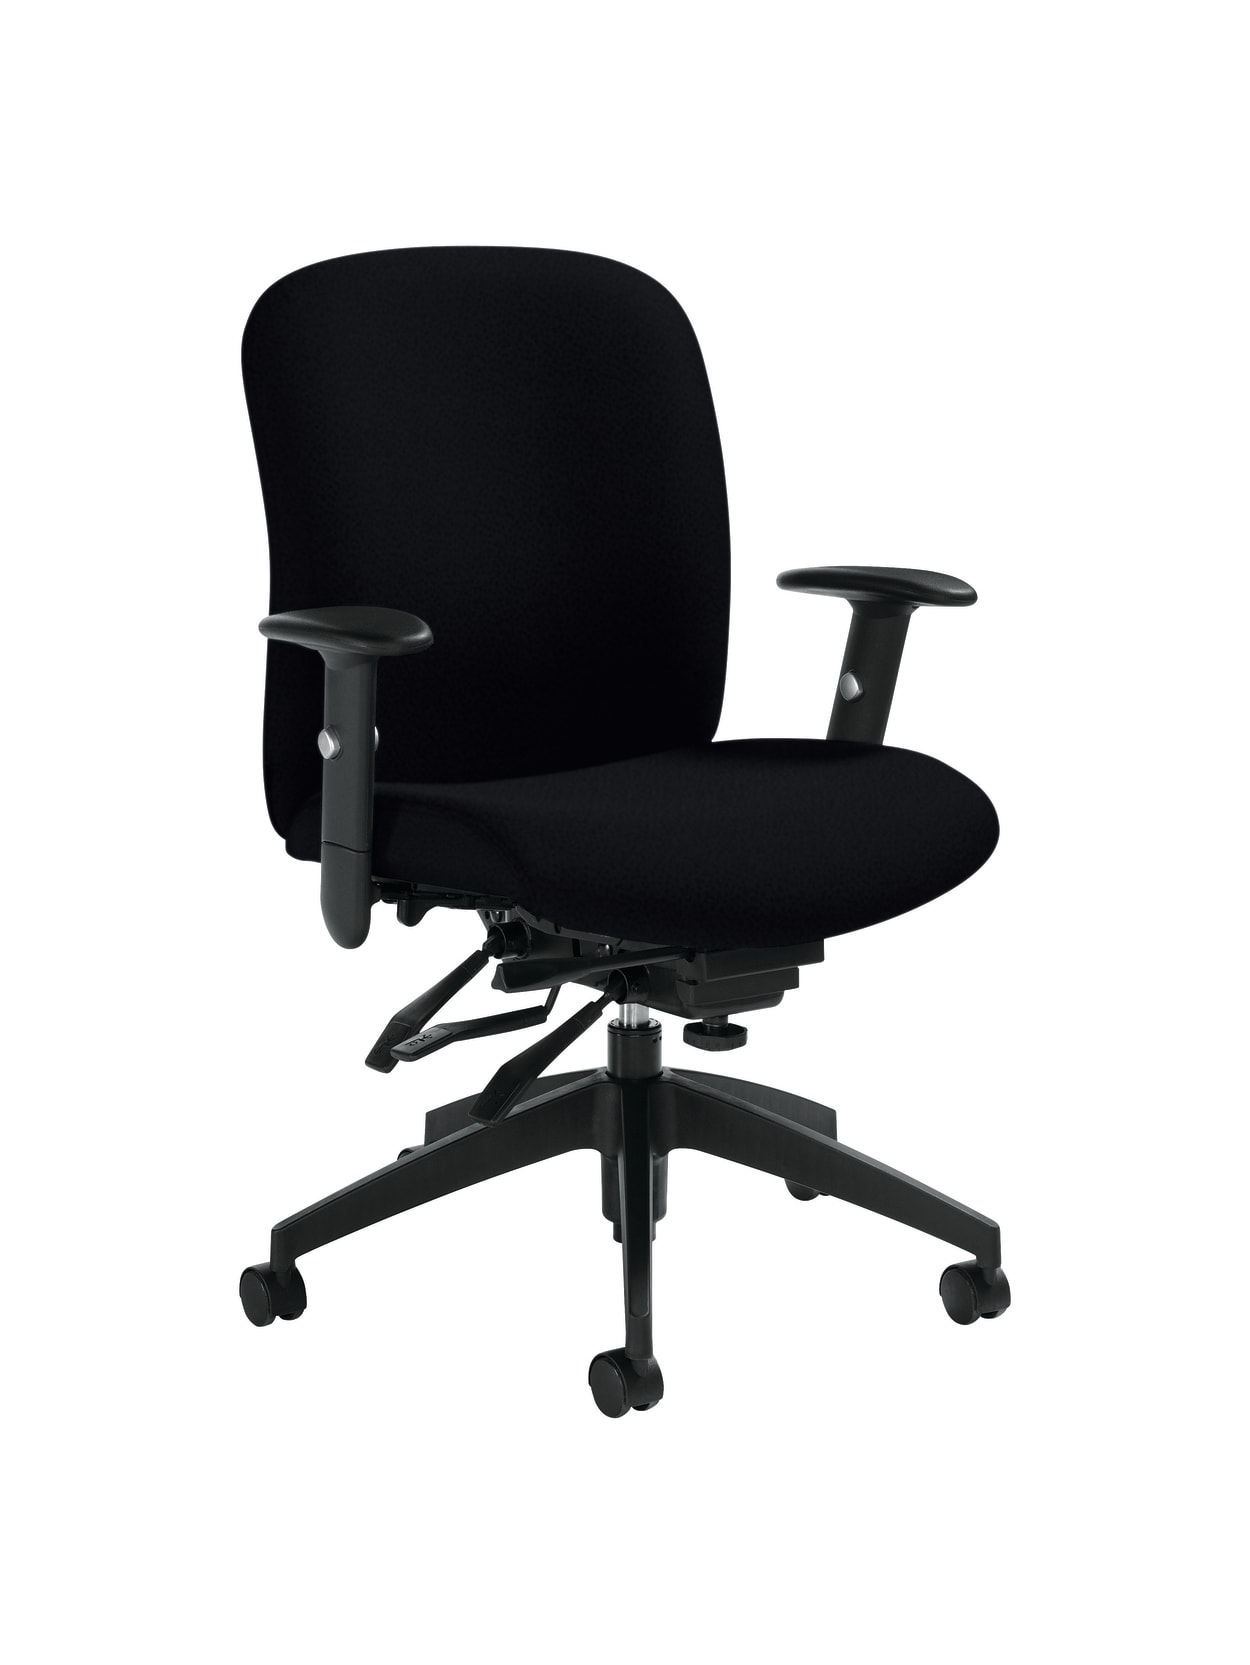 global® heavyduty truform multitilter adjustable chair midback 38  12"h x 26"w x 25"d black item  917494